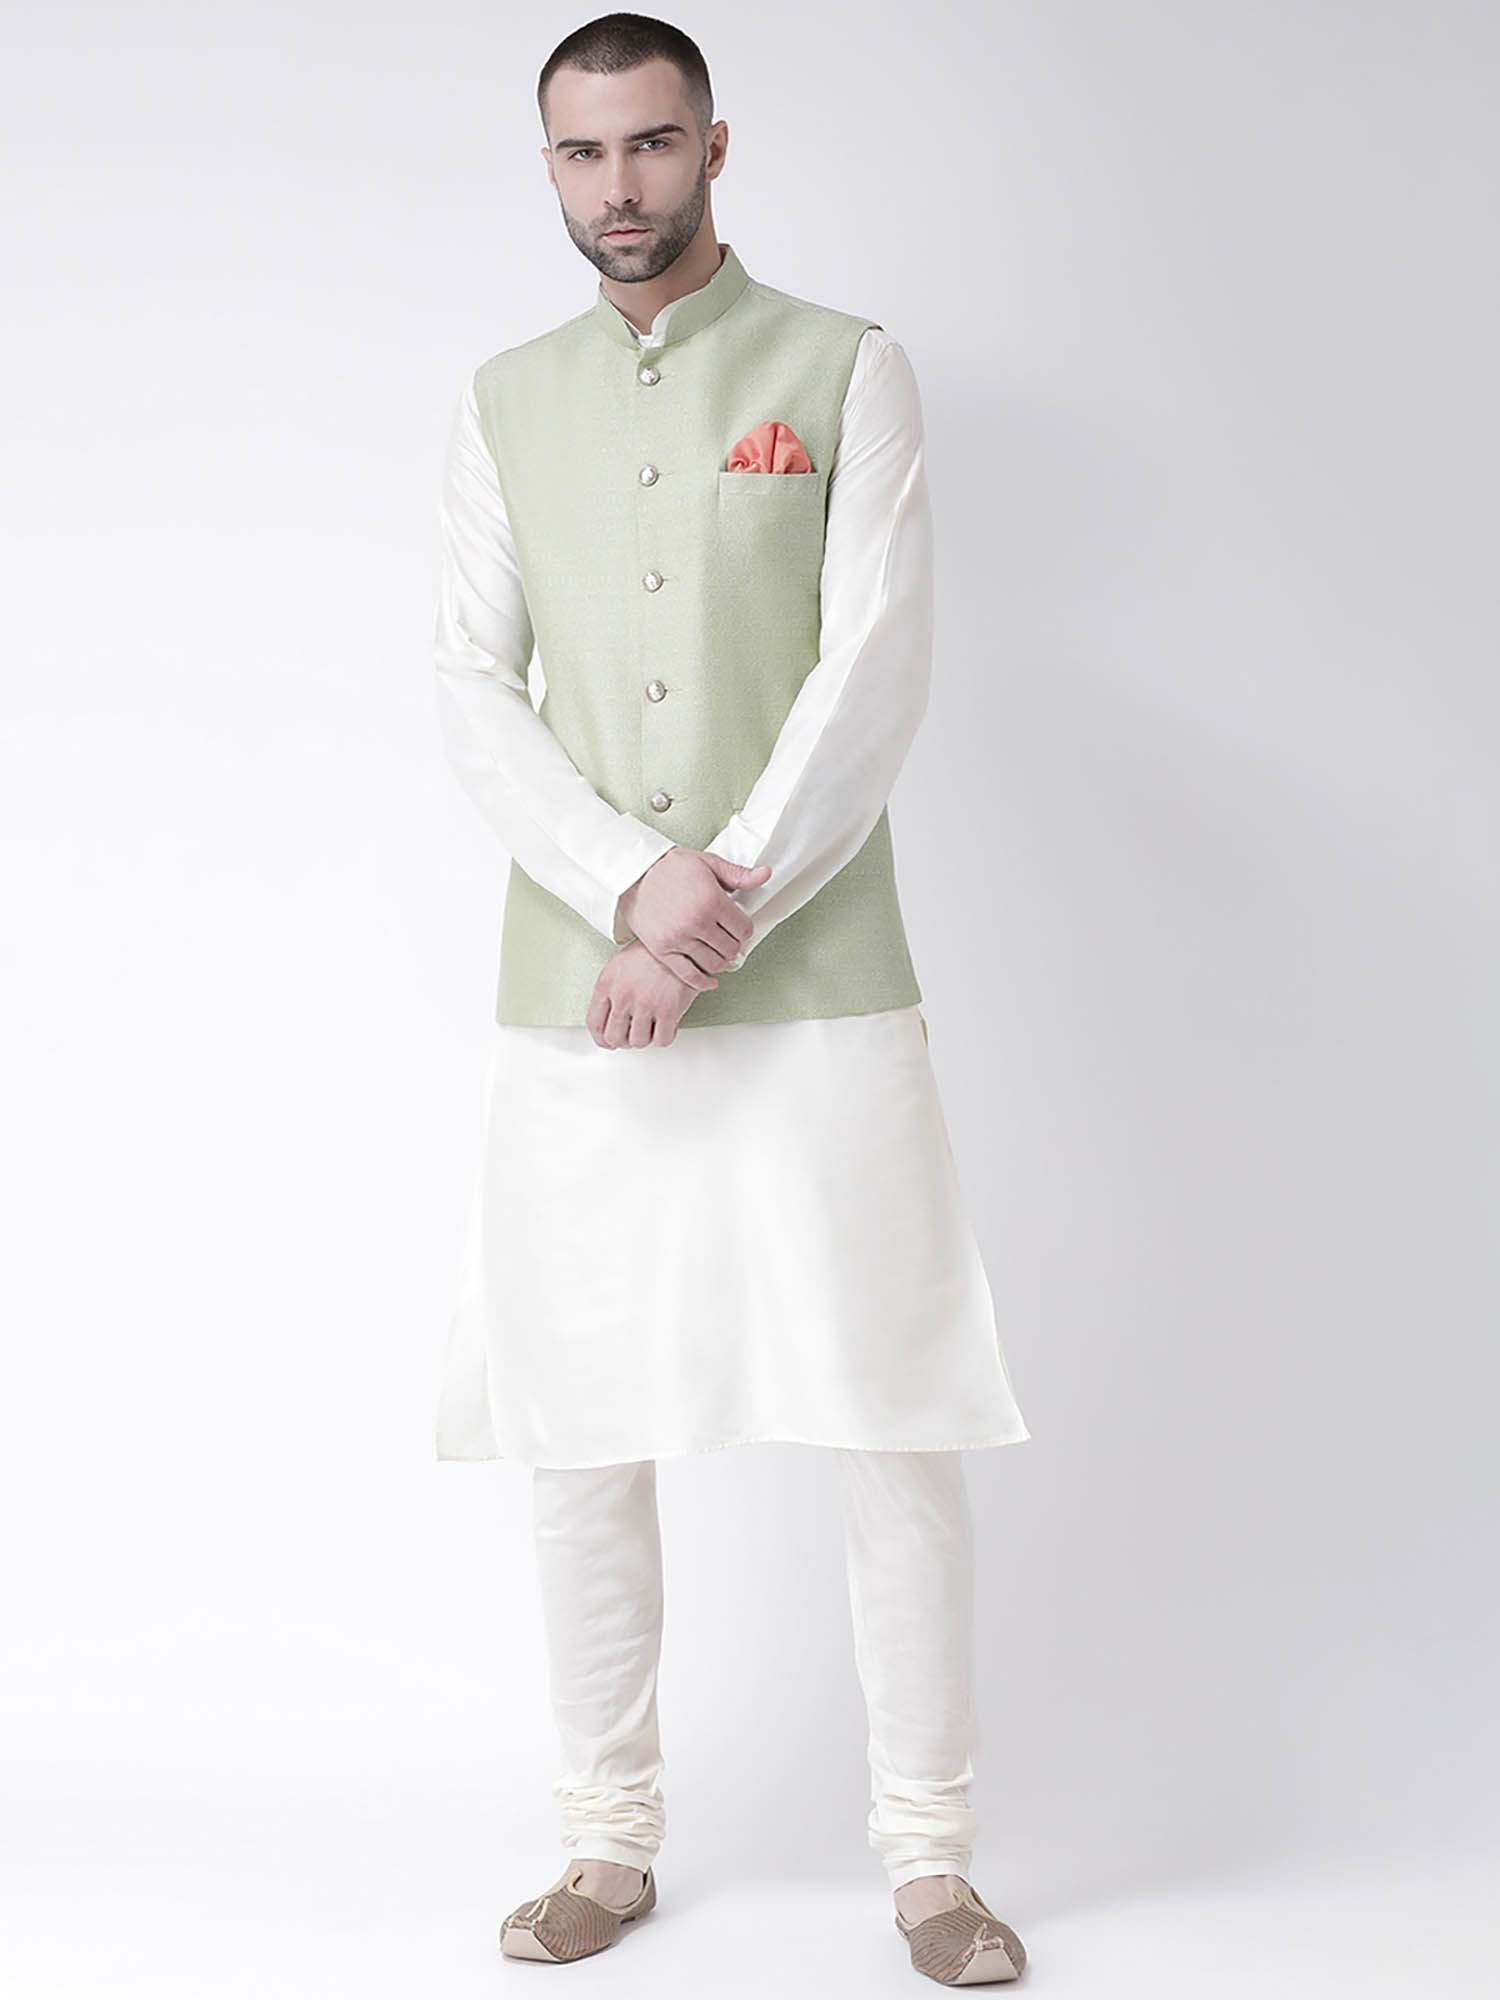 Kurta and Churidaar with Nehru Jacket by KIsah available on Nykaa Fashion